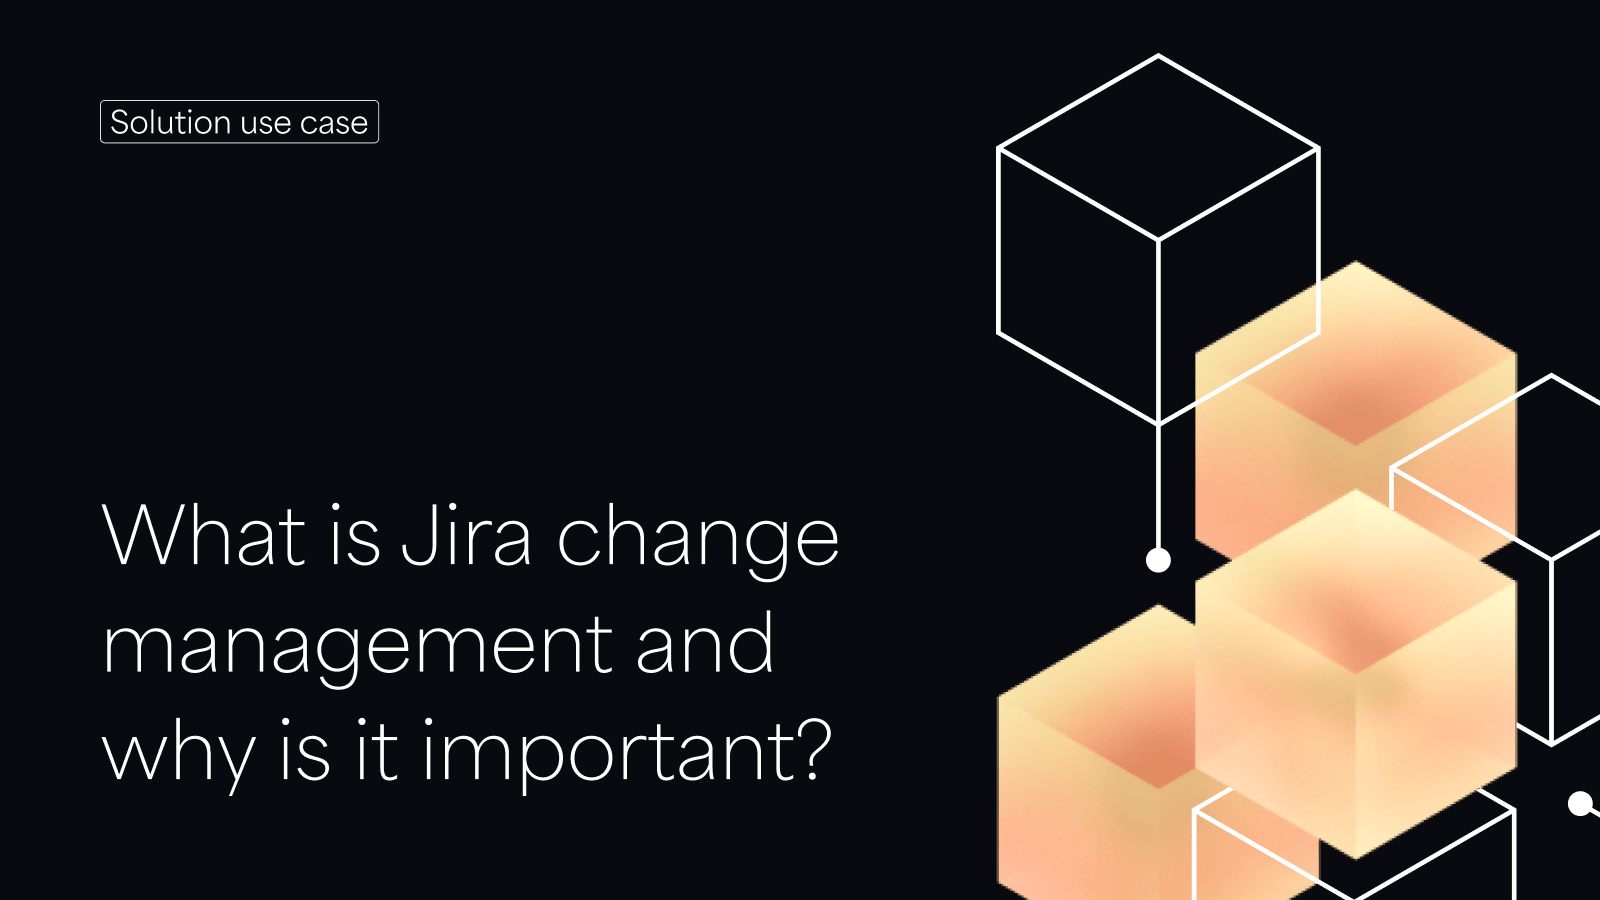 Jira Change Management